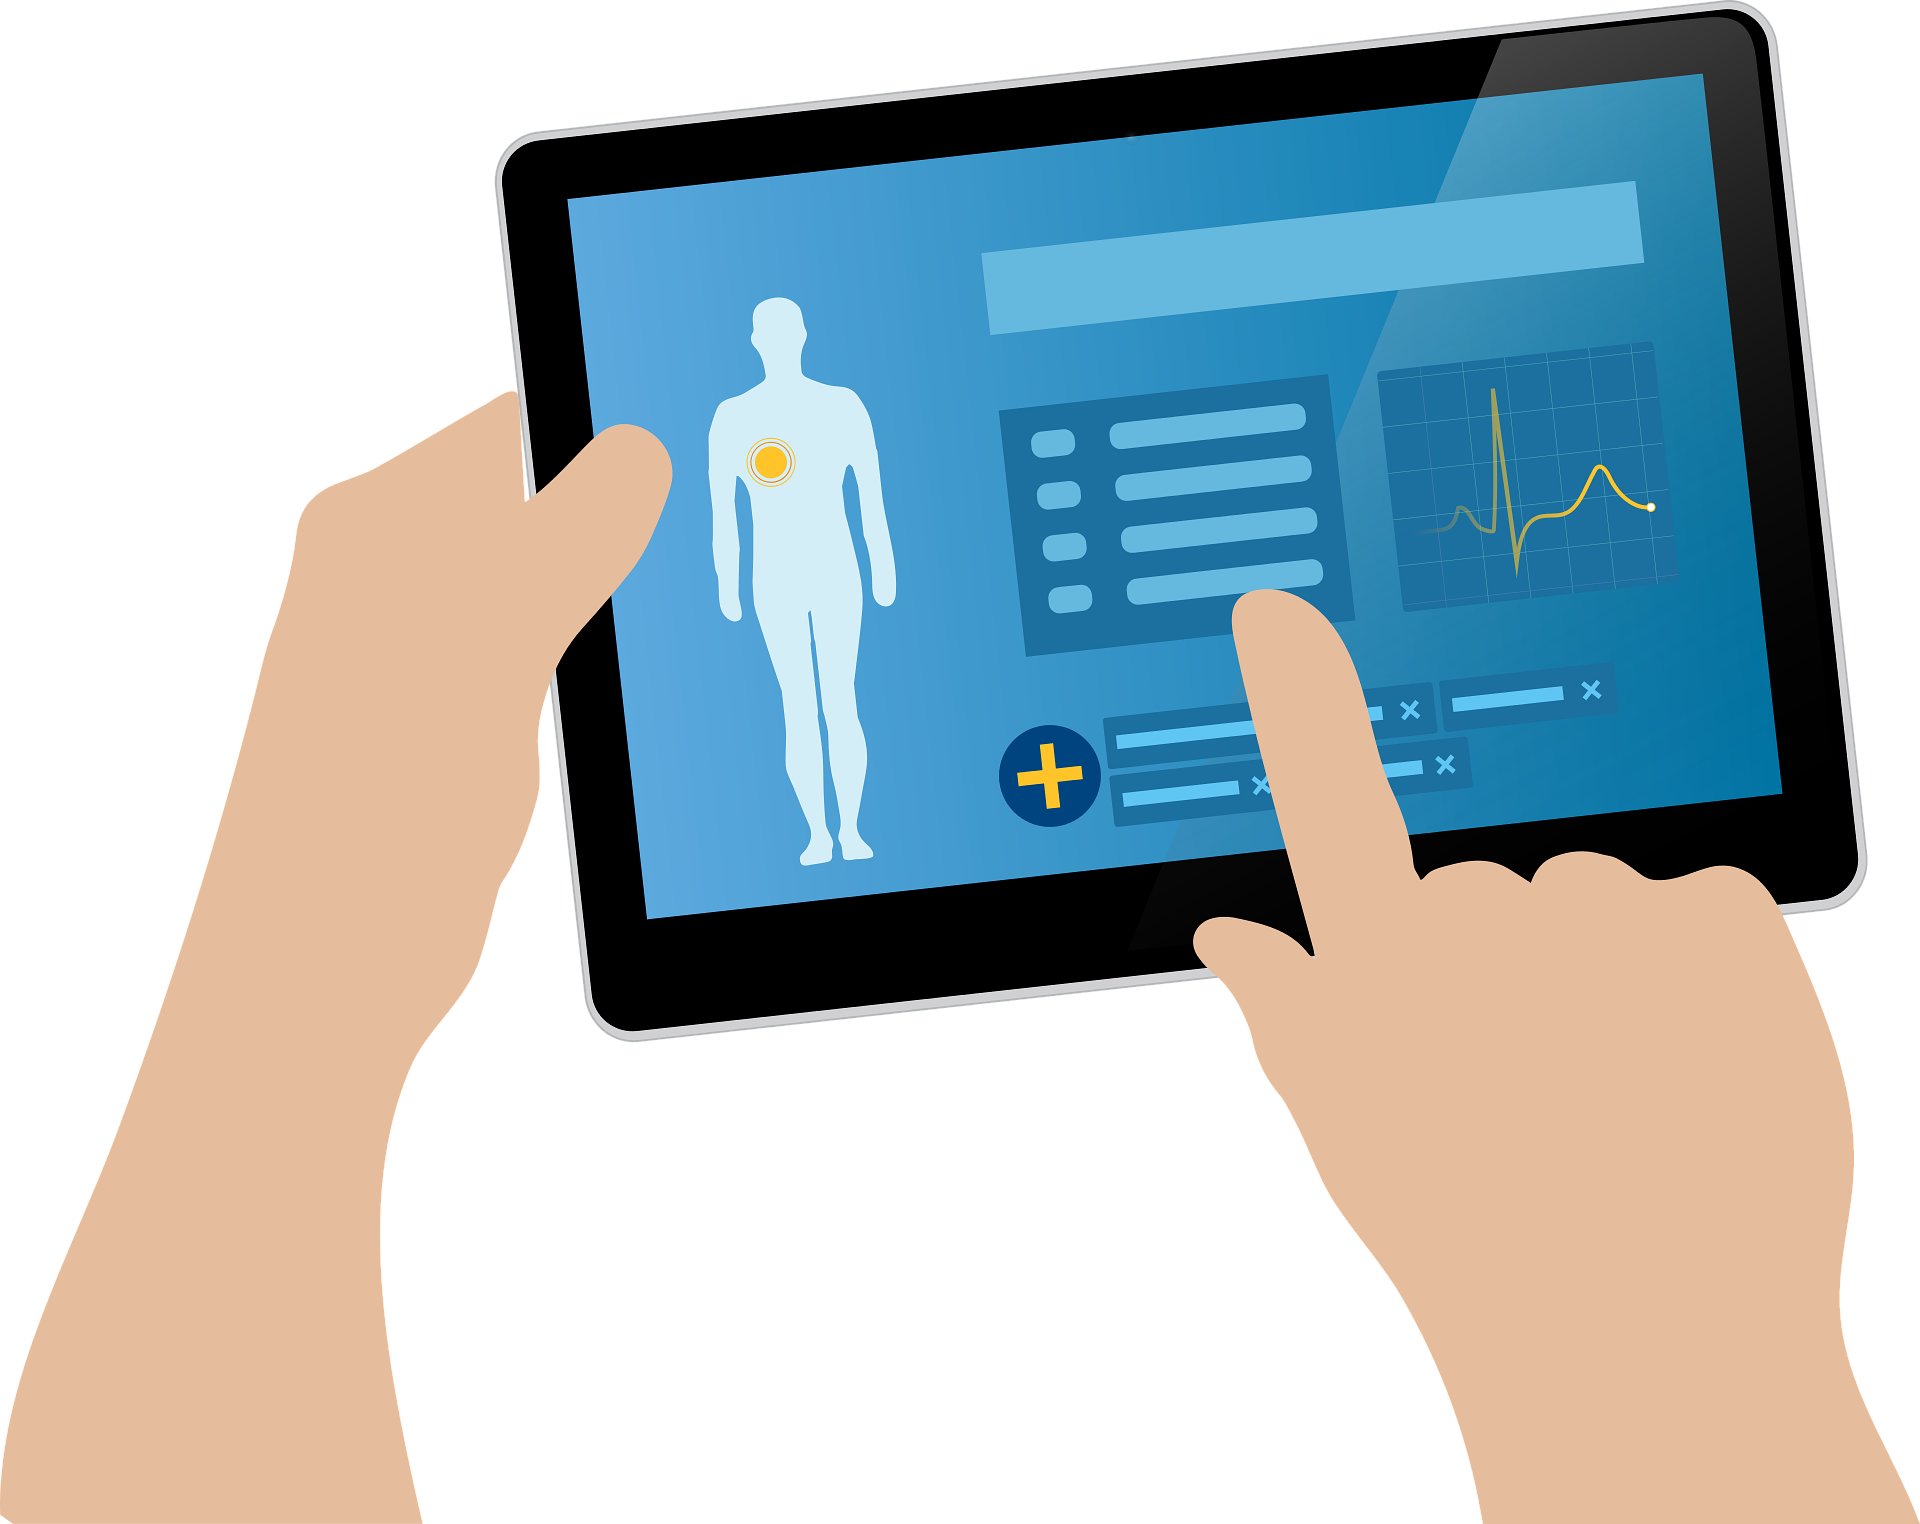 Monitoring chronic disease burden: Electronic health records can help meet a serious public health challenge - health tips - Health - Public News Time